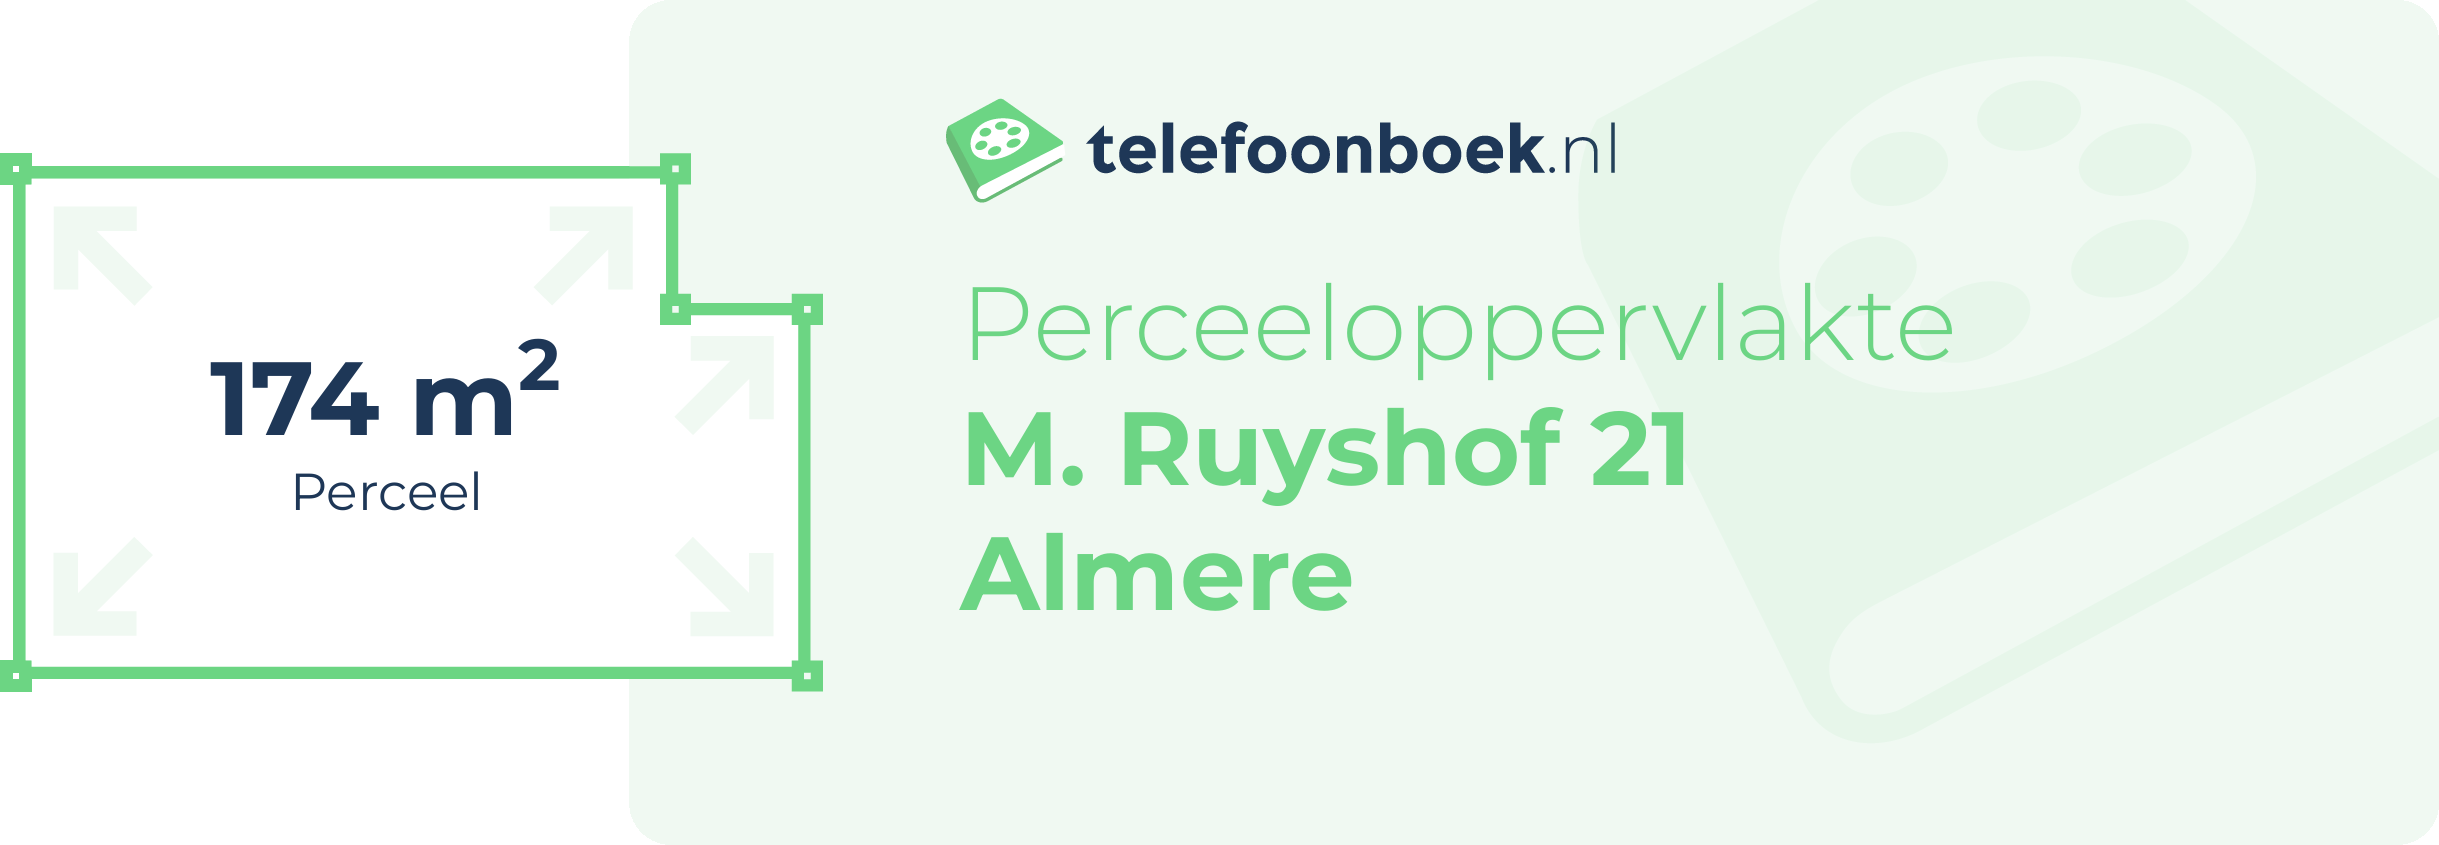 Perceeloppervlakte M. Ruyshof 21 Almere